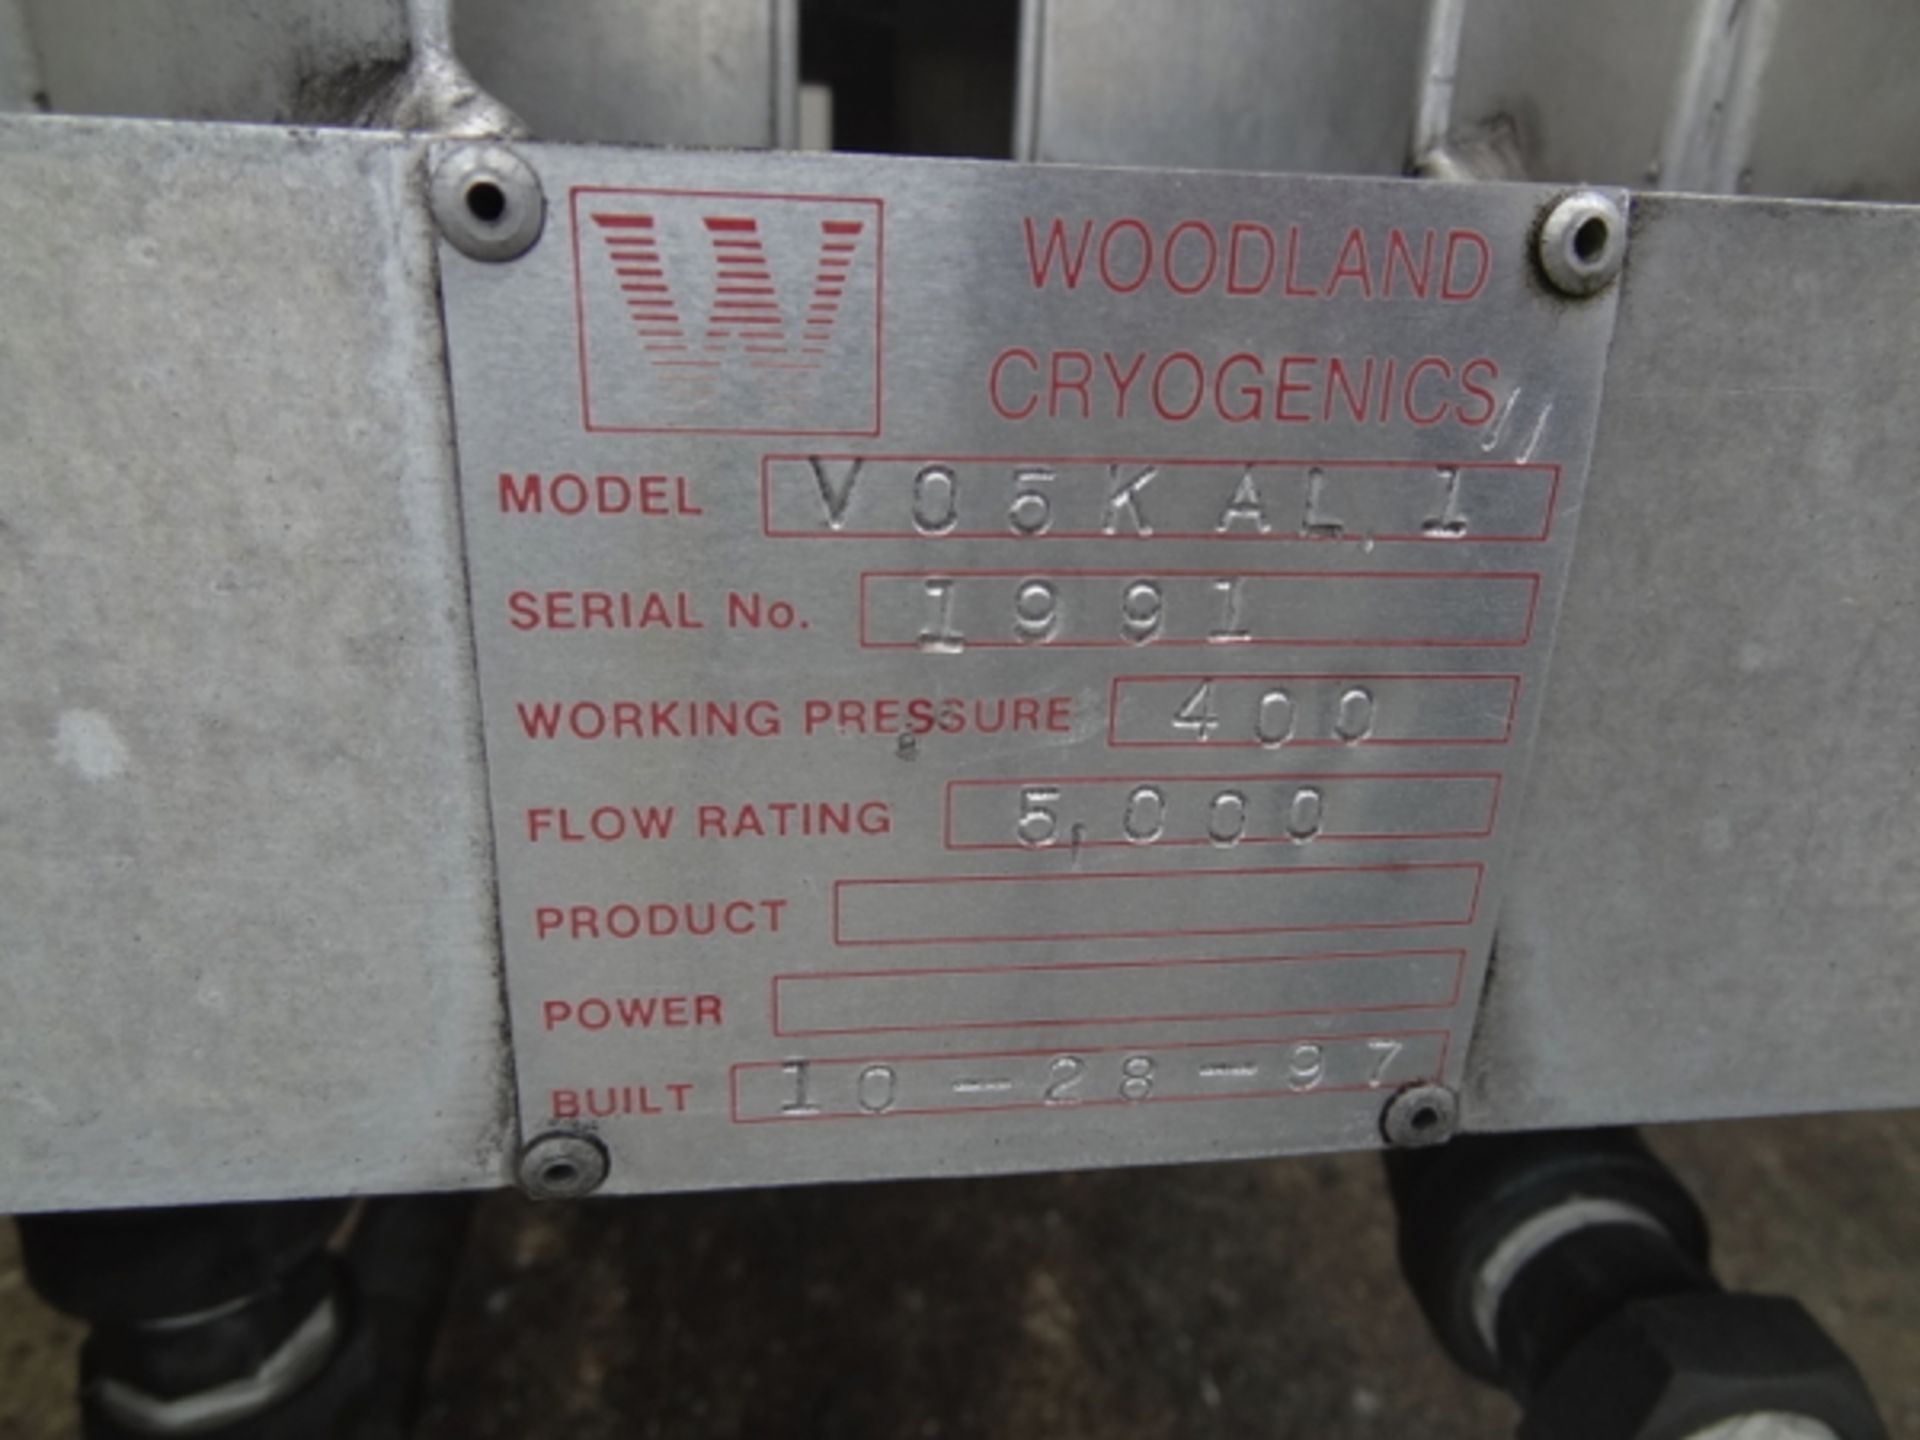 Woodland Cryogenics CO2 Vaporizer Model V05KAL1 - 5,000 lb/hr capacity | Rigging Price: $350 - Image 2 of 2